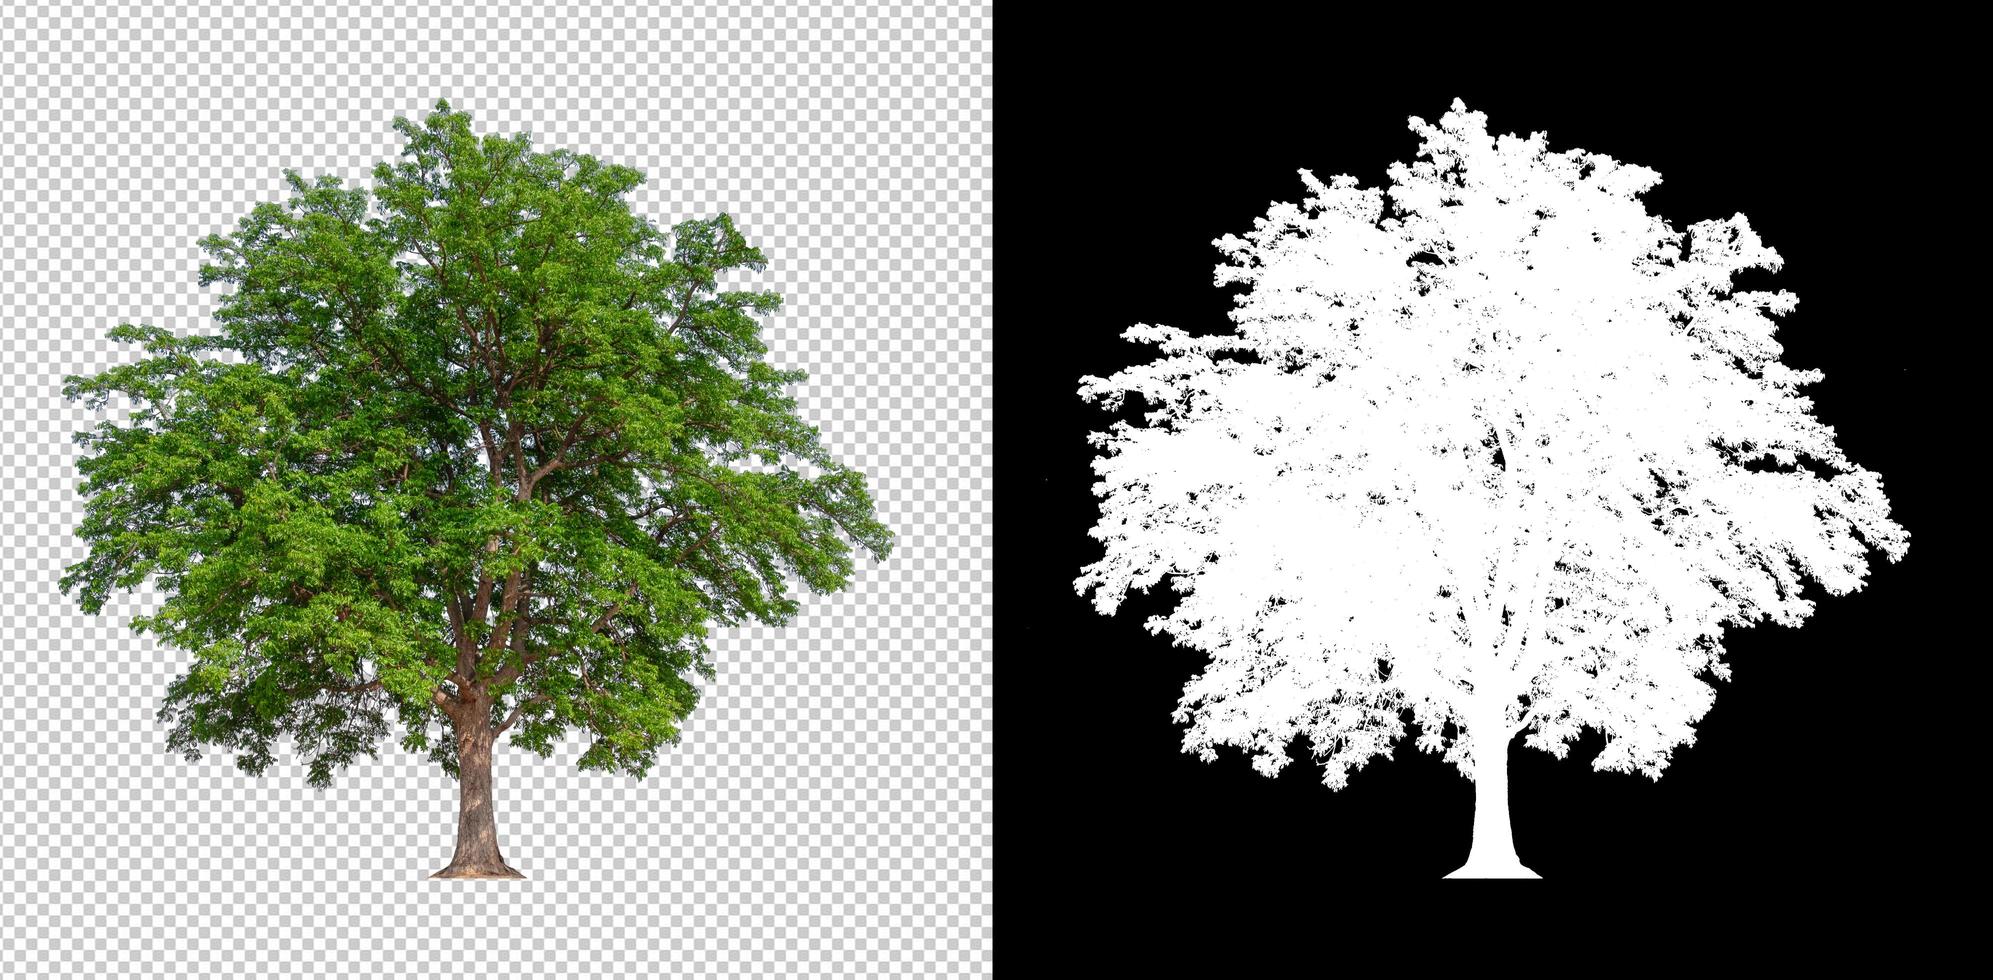 geïsoleerde boom op transparante afbeelding achtergrond met clipping foto